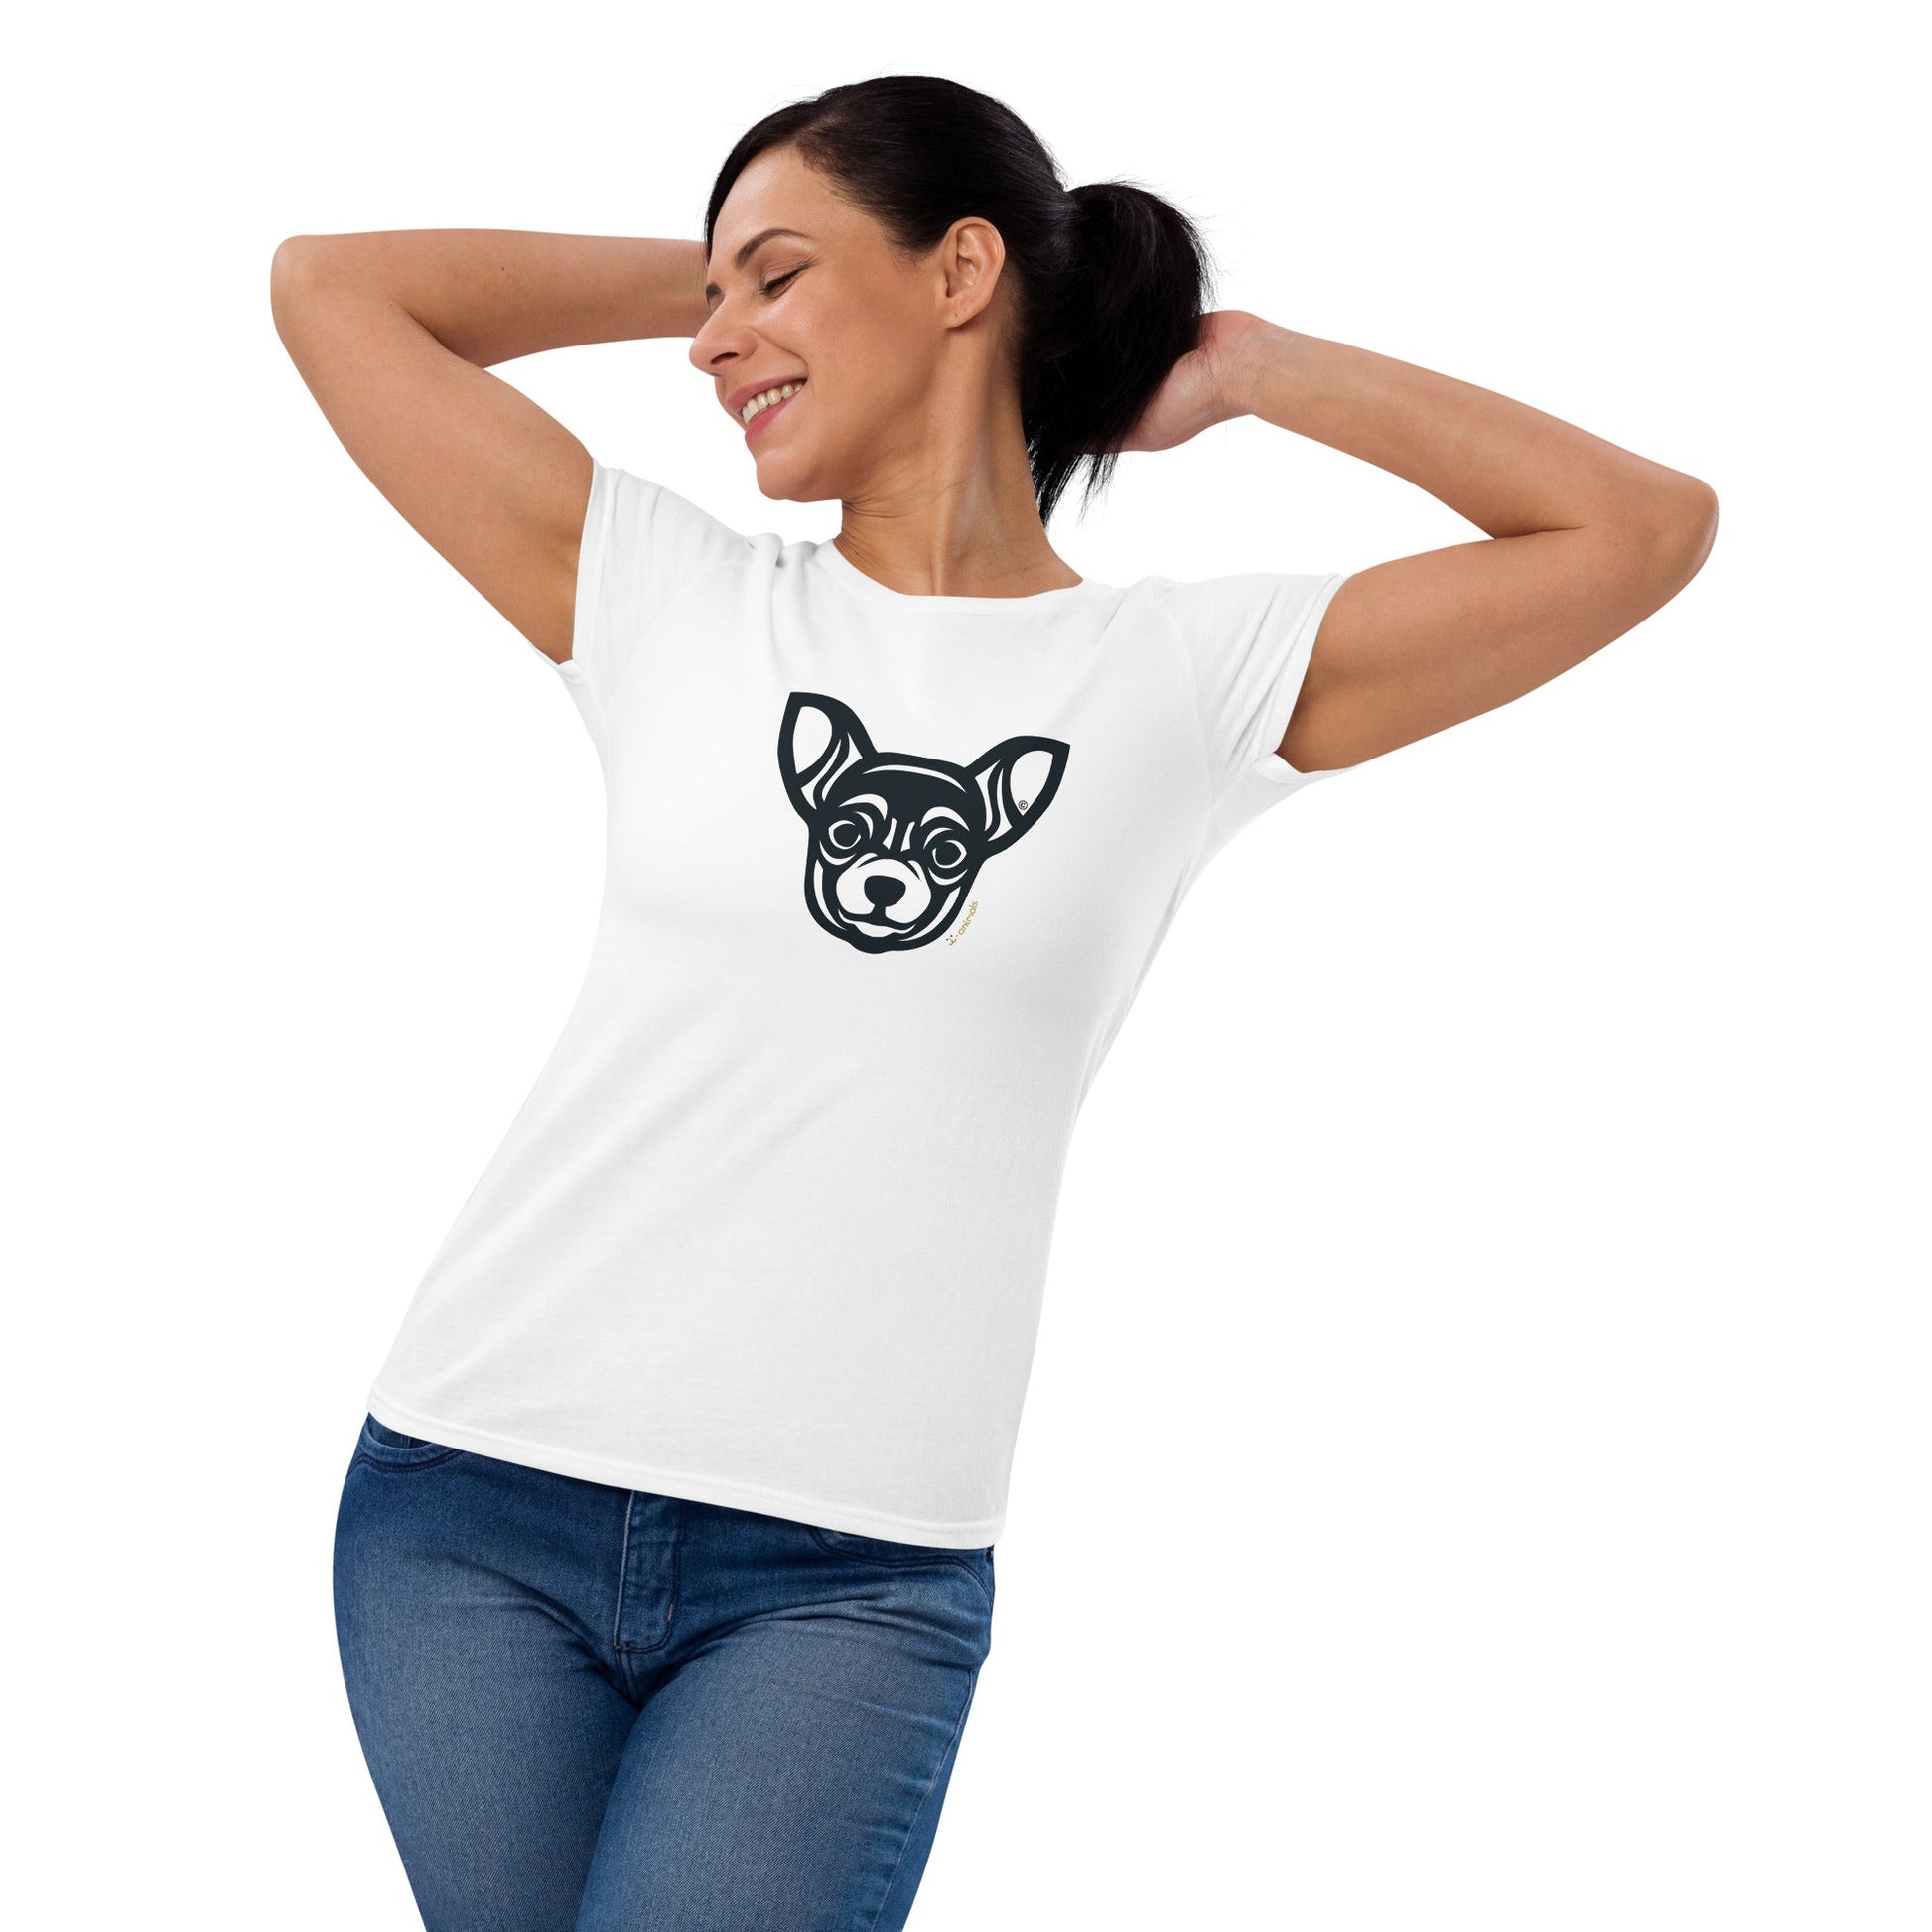 Camiseta feminina de manga curta - Chihuahua - Tribal - Cores Claras i-animals